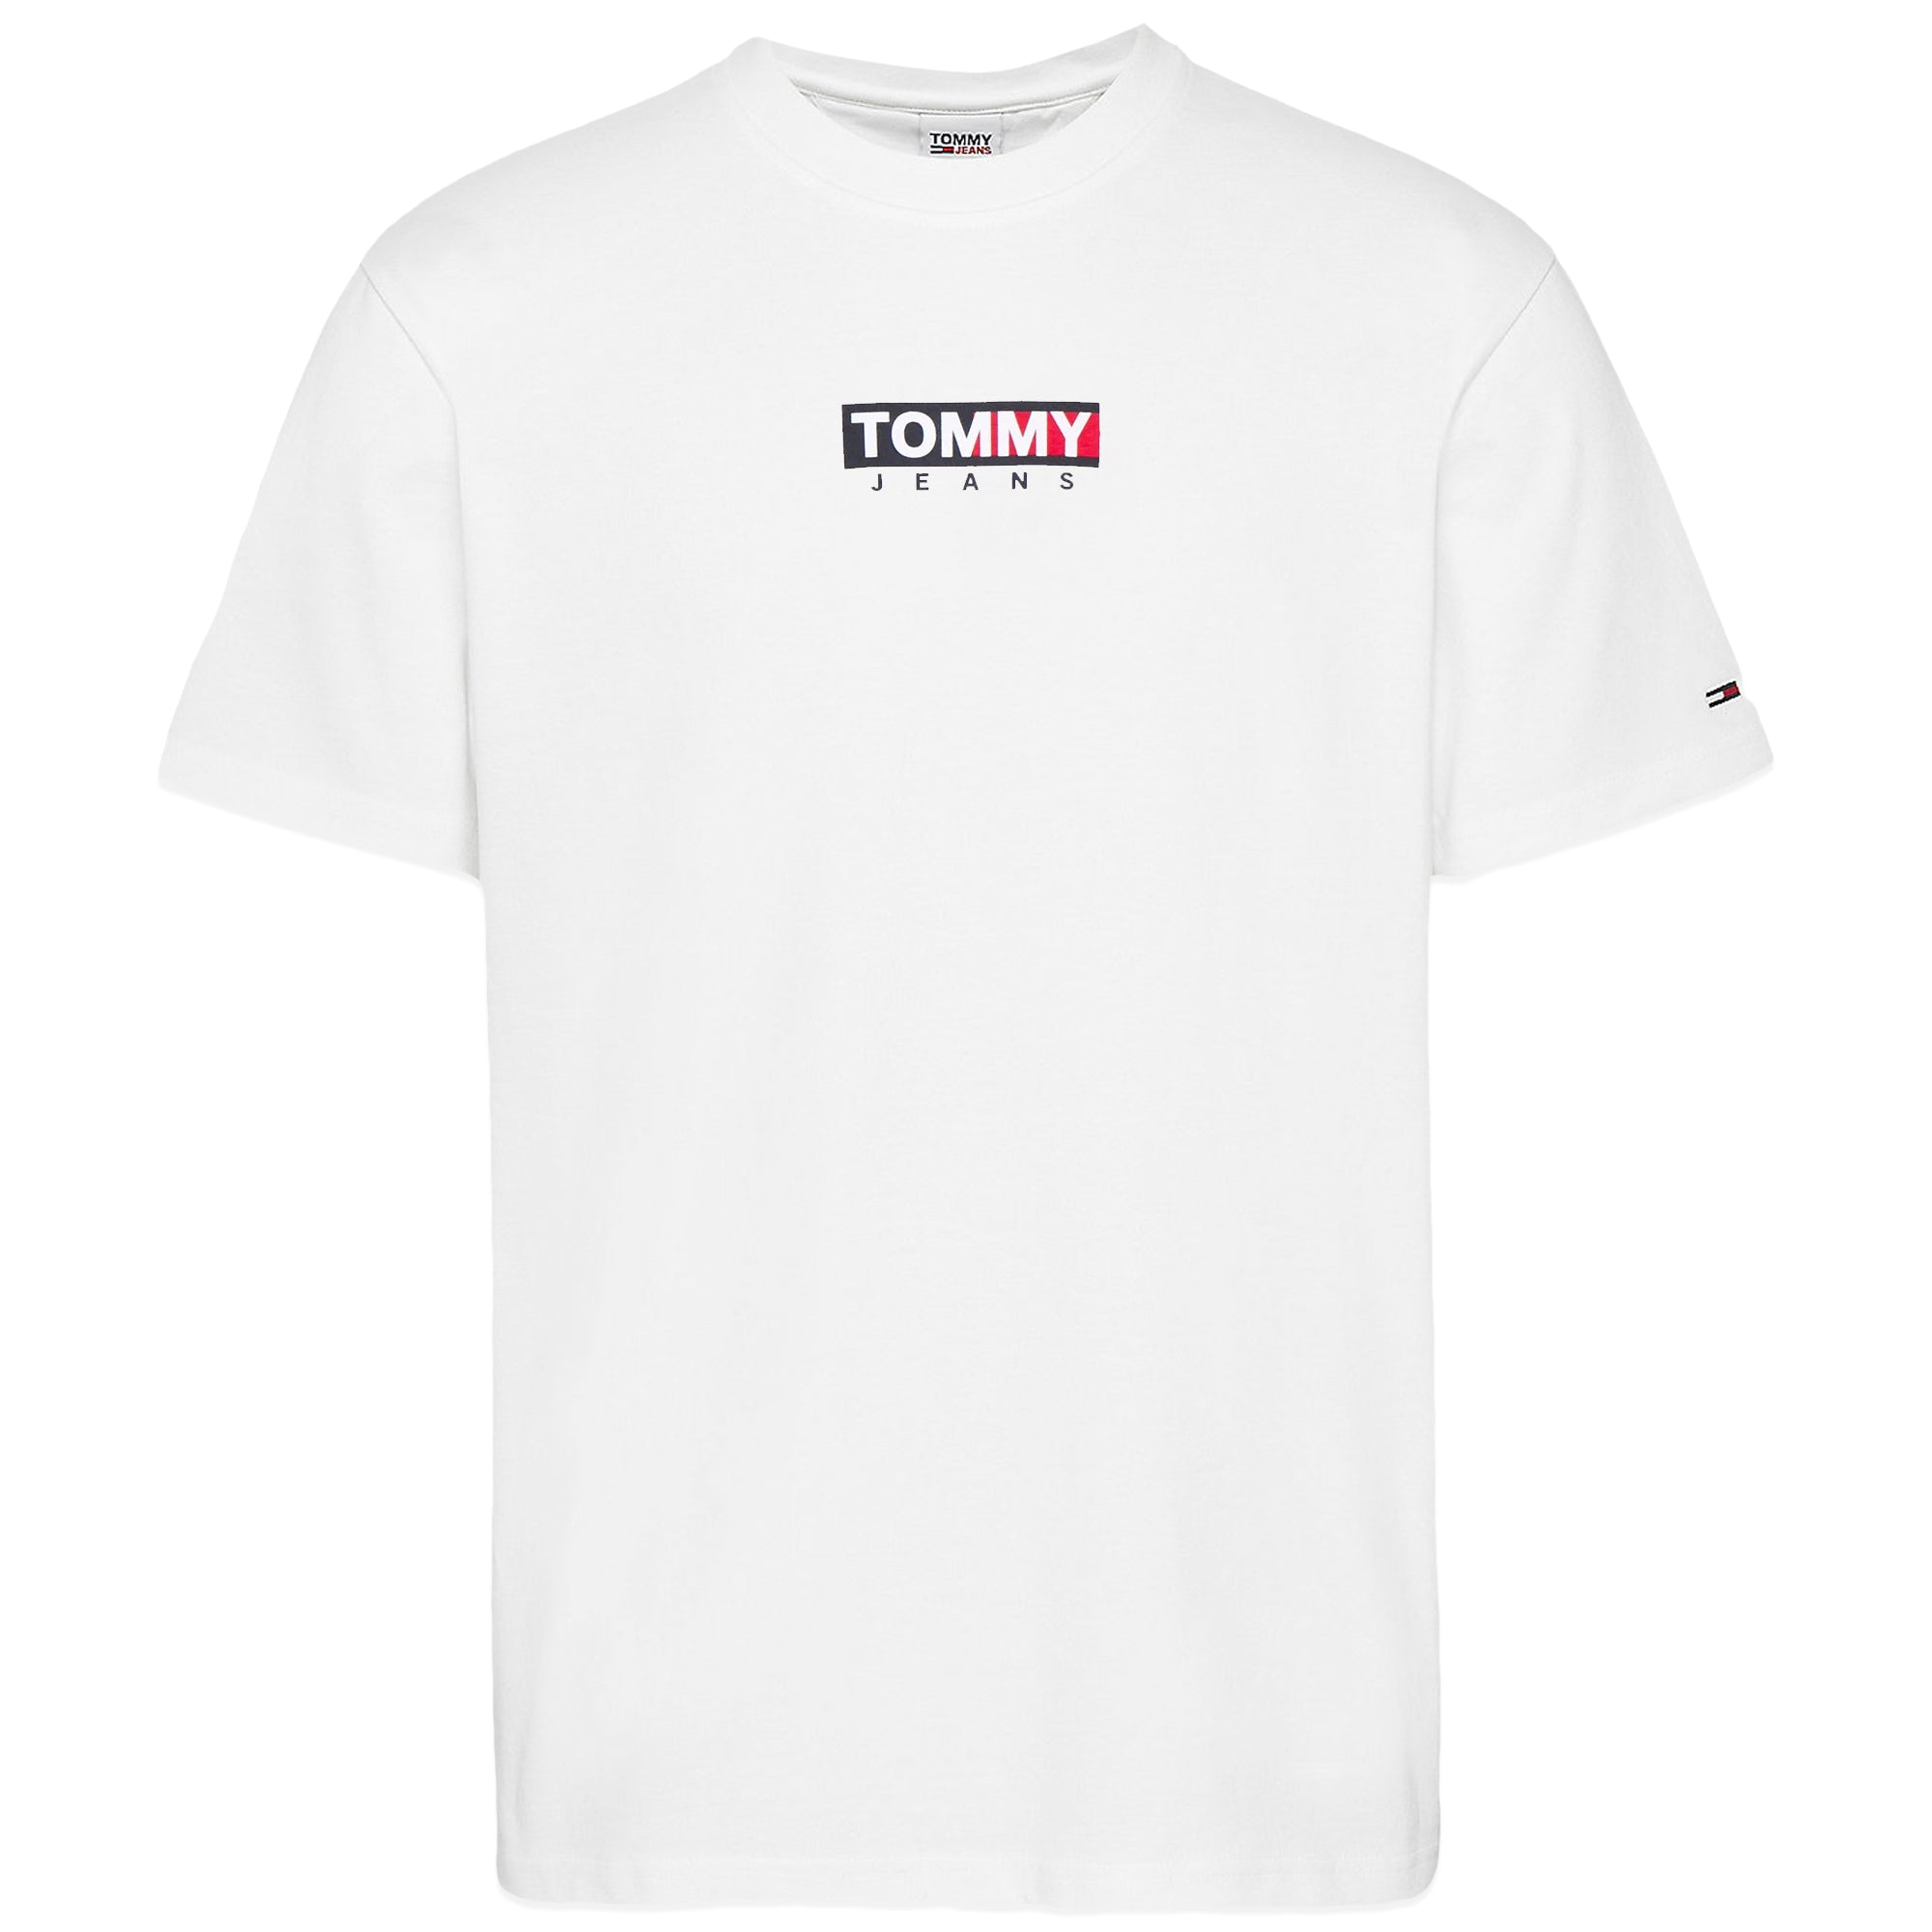 Tommy Jeans Timeless Flocked Flag T-Shirt - White